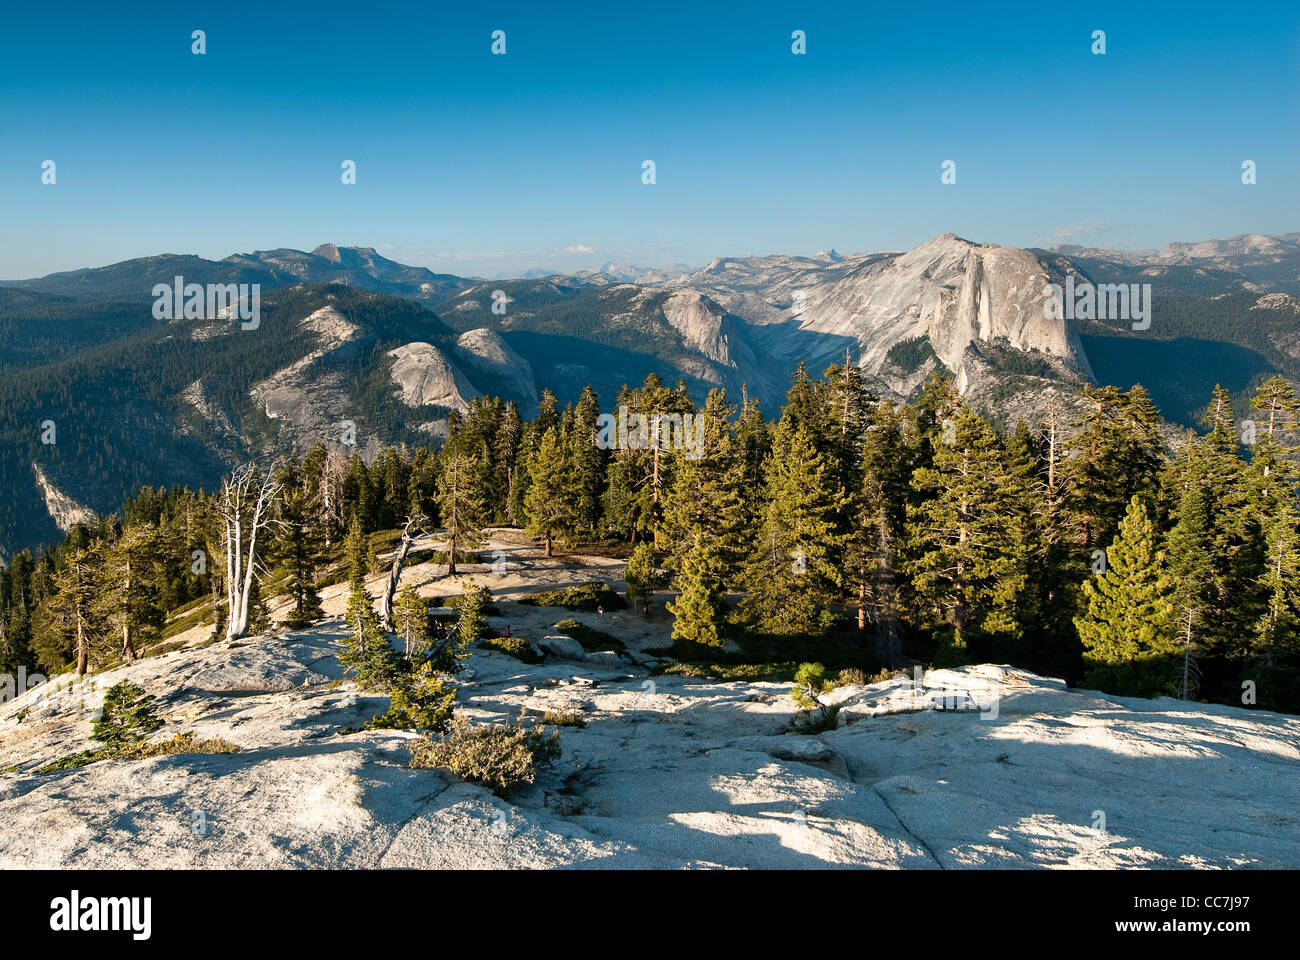 Vista panoramica dal seninel dome in Yosemite National Park, California, Stati Uniti d'America Foto Stock